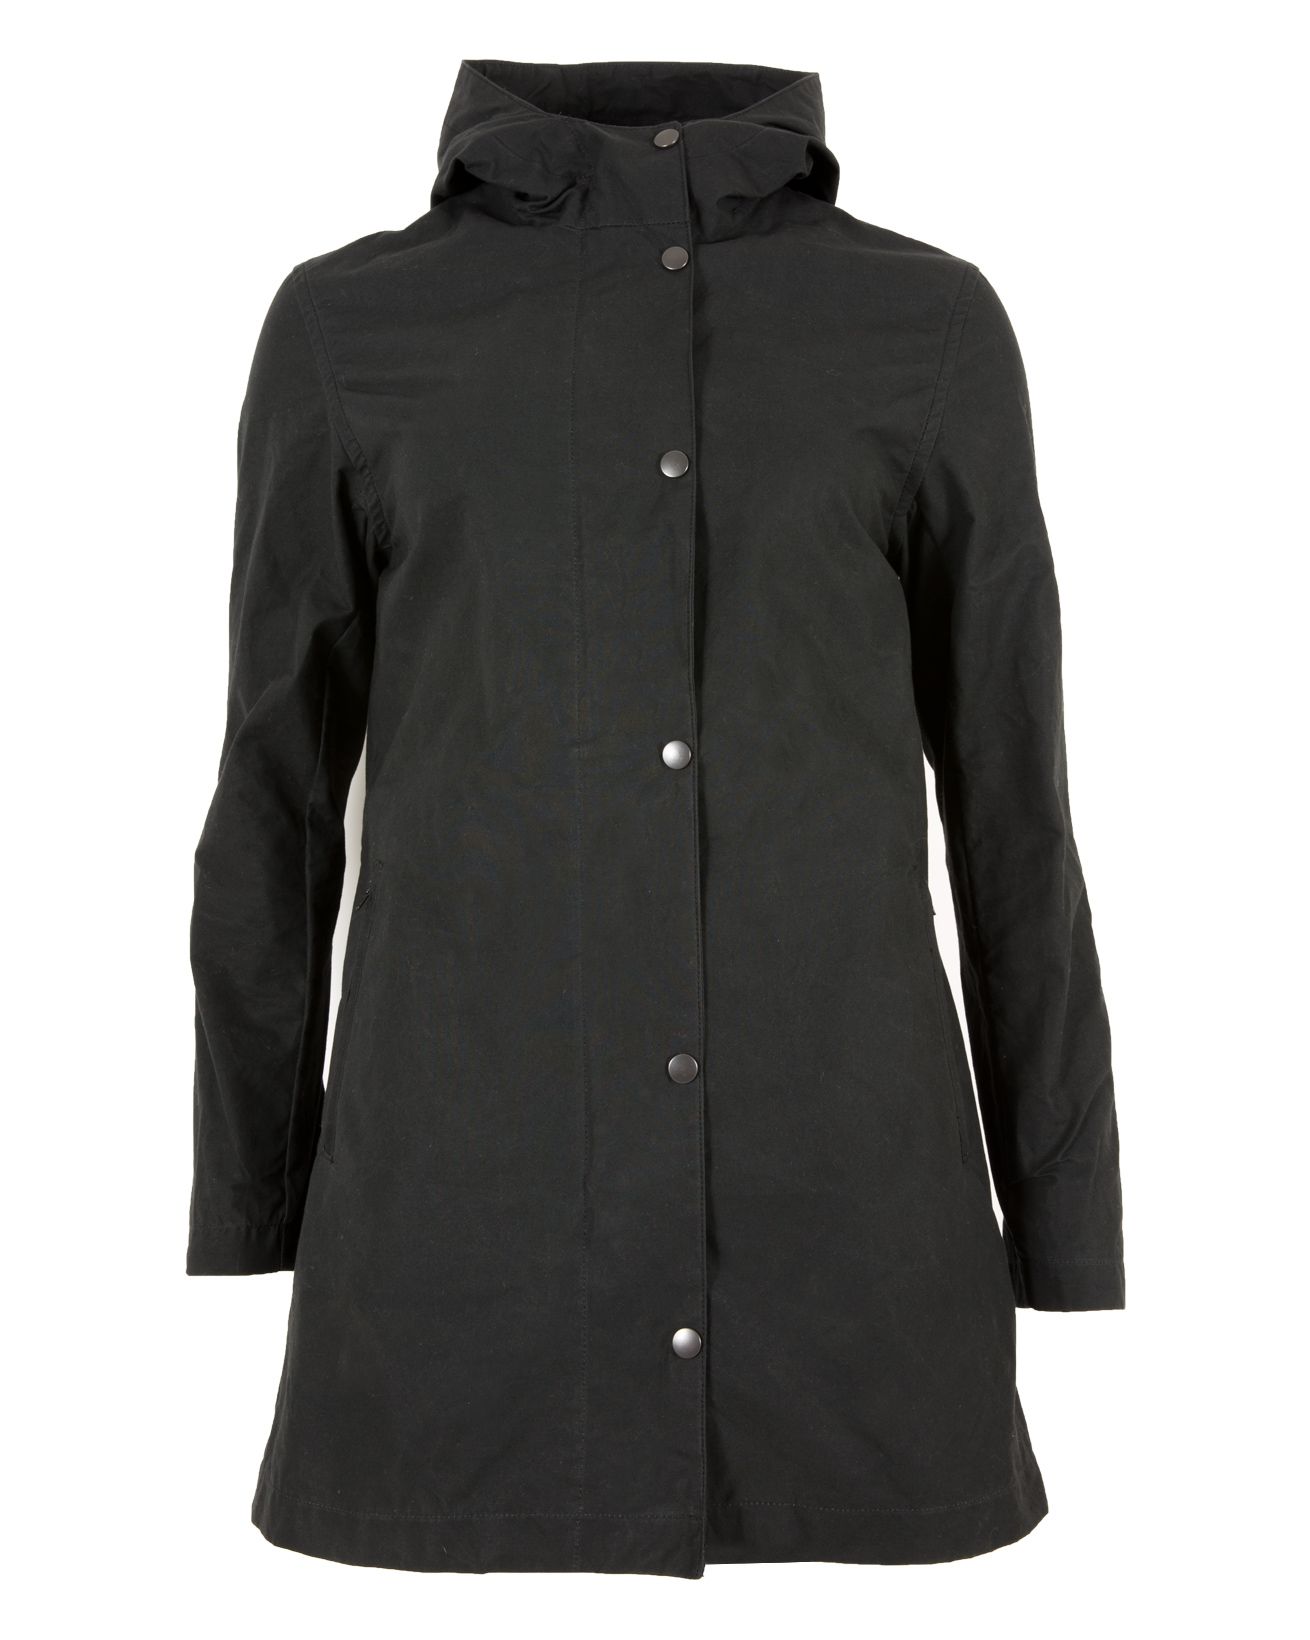 7506-wax rain jacket-black-front.jpg